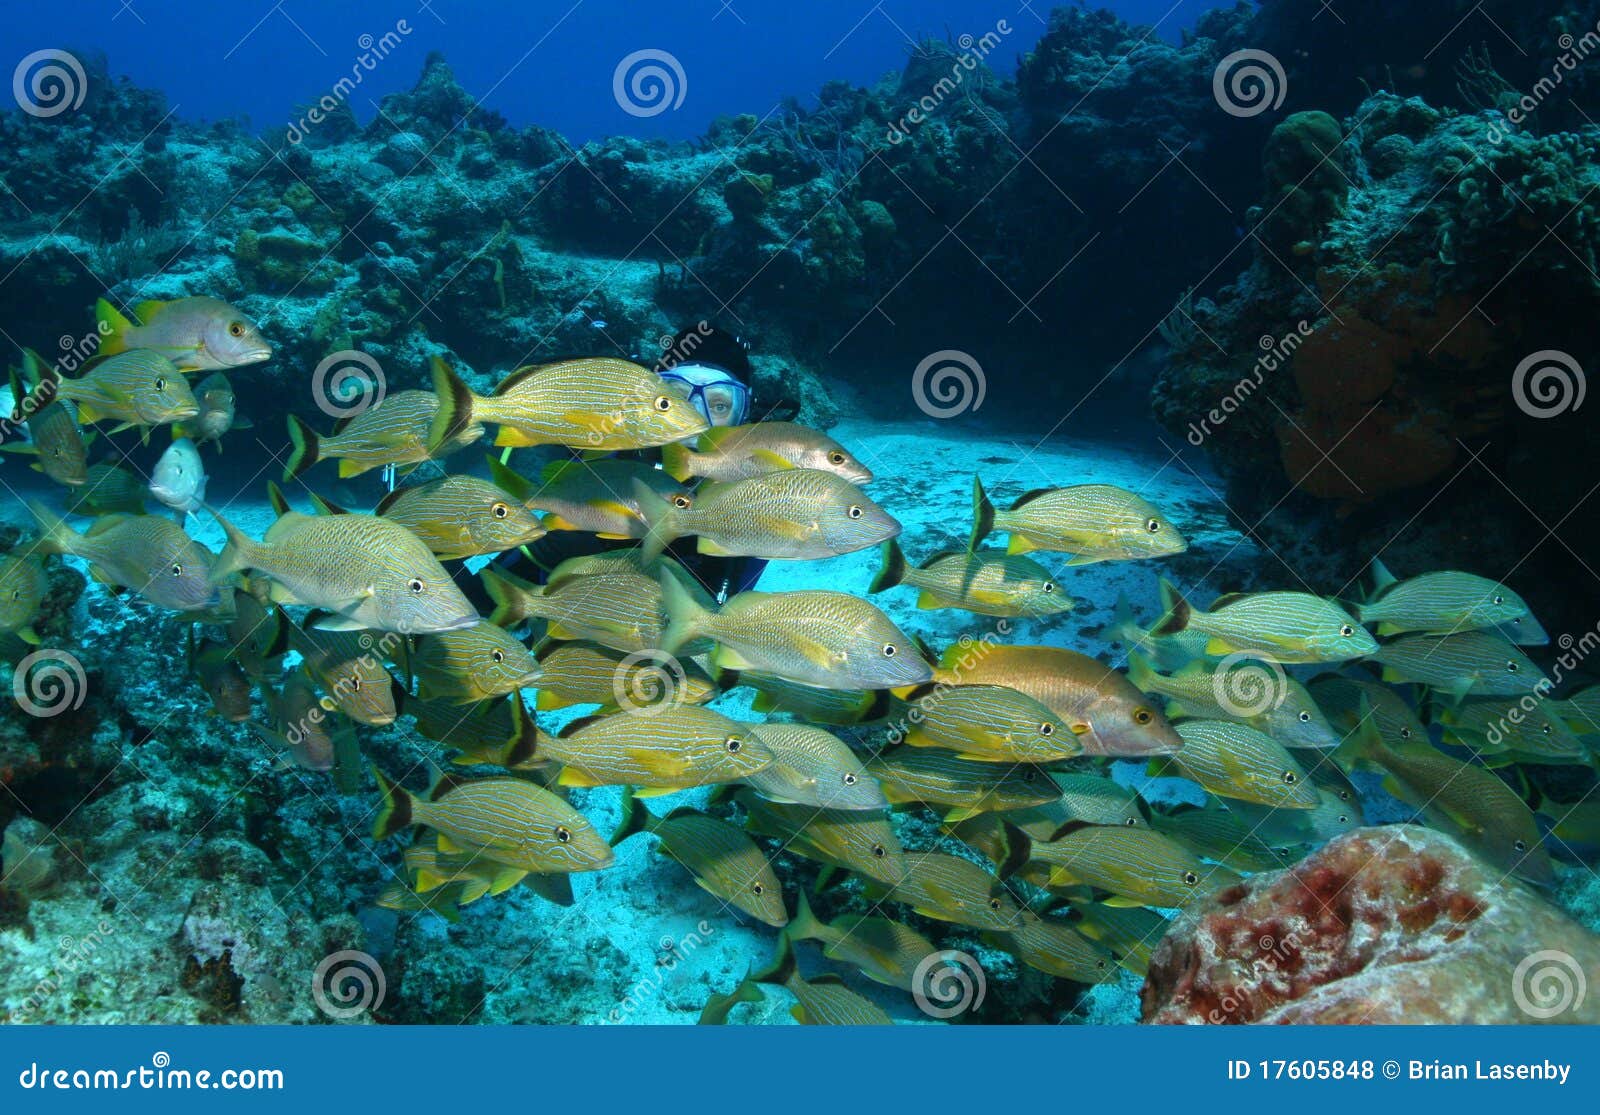 scuba diver and school of fish - cozumel mexico